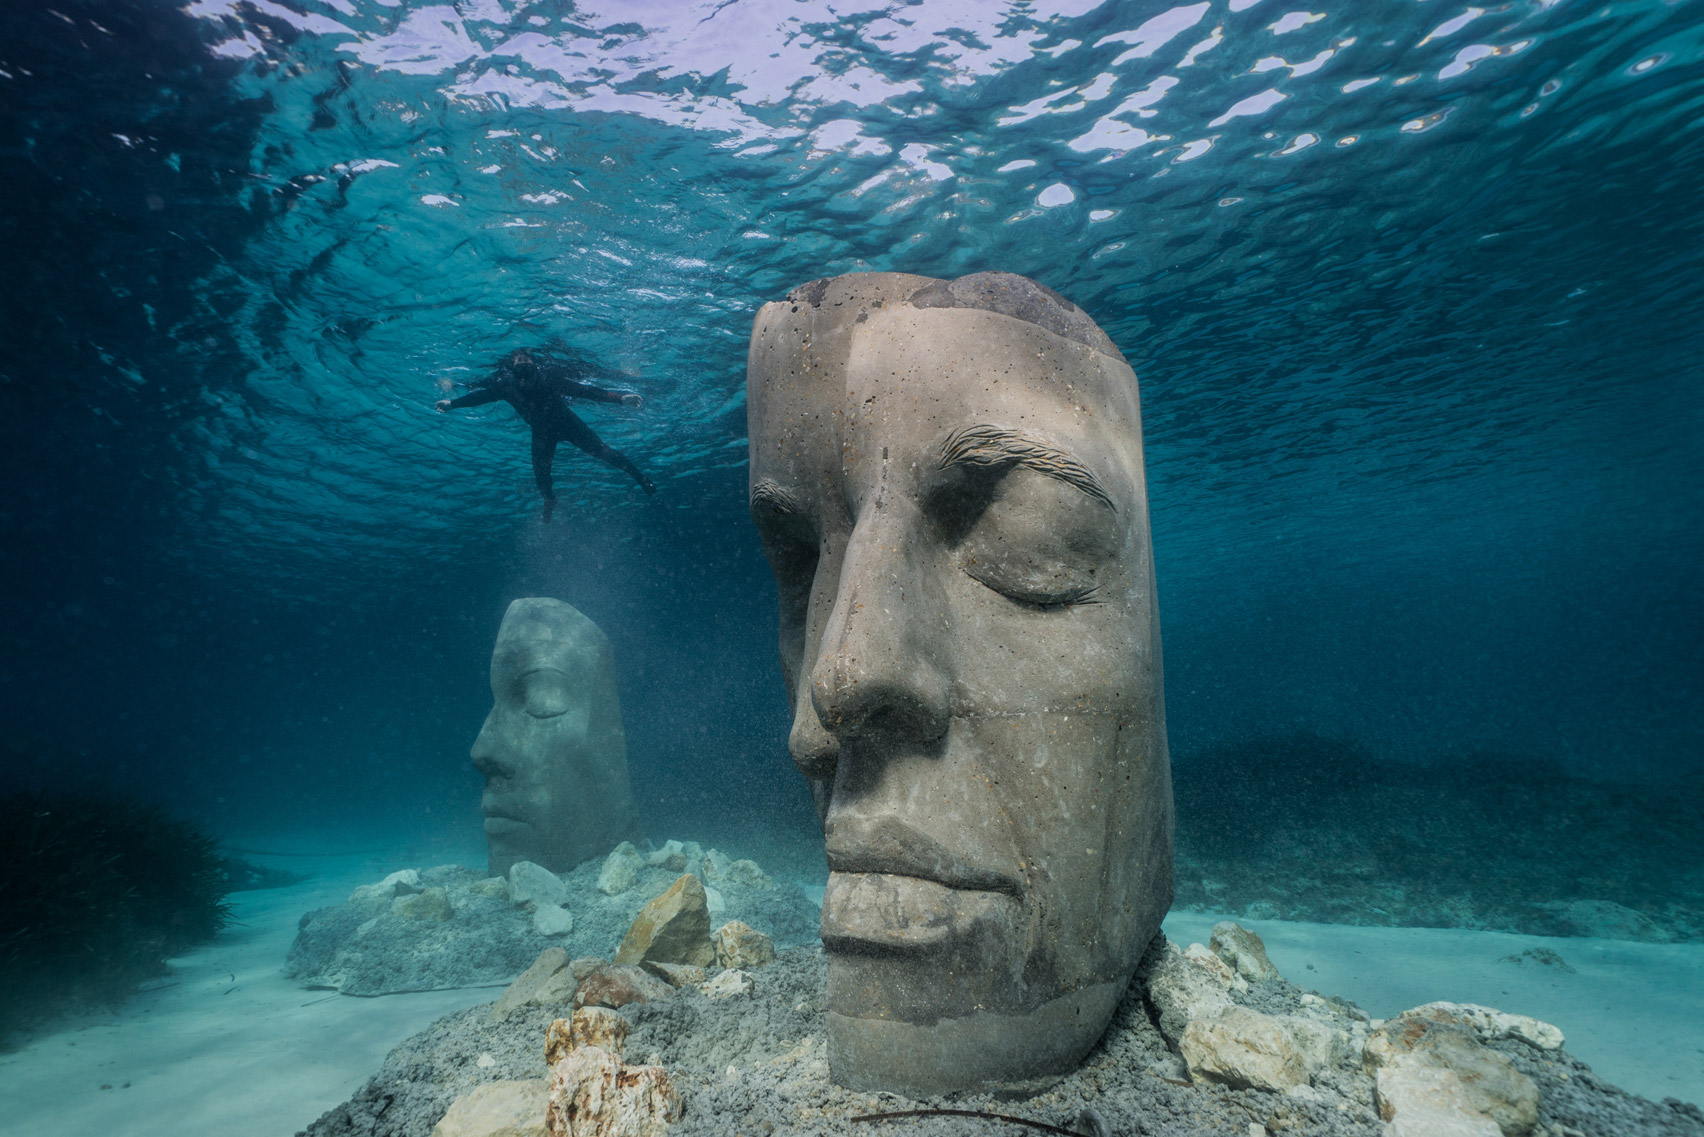 A snorkeler observing two underwater sculptures